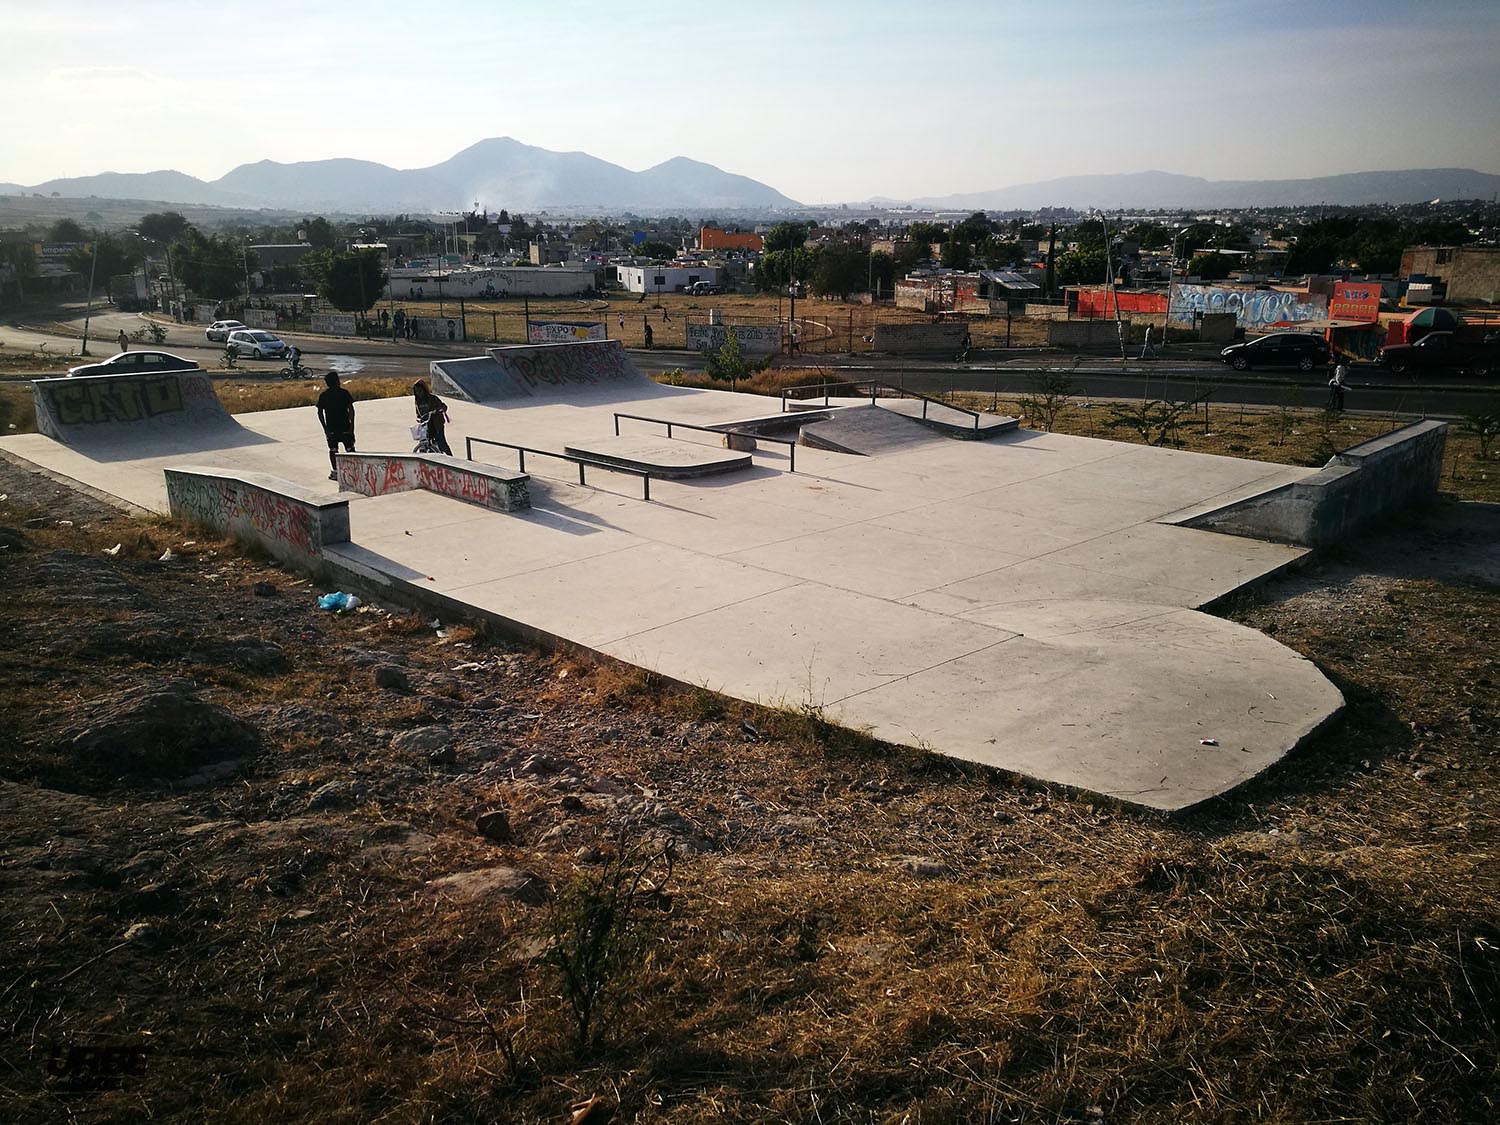 Skatepark Ojalateros